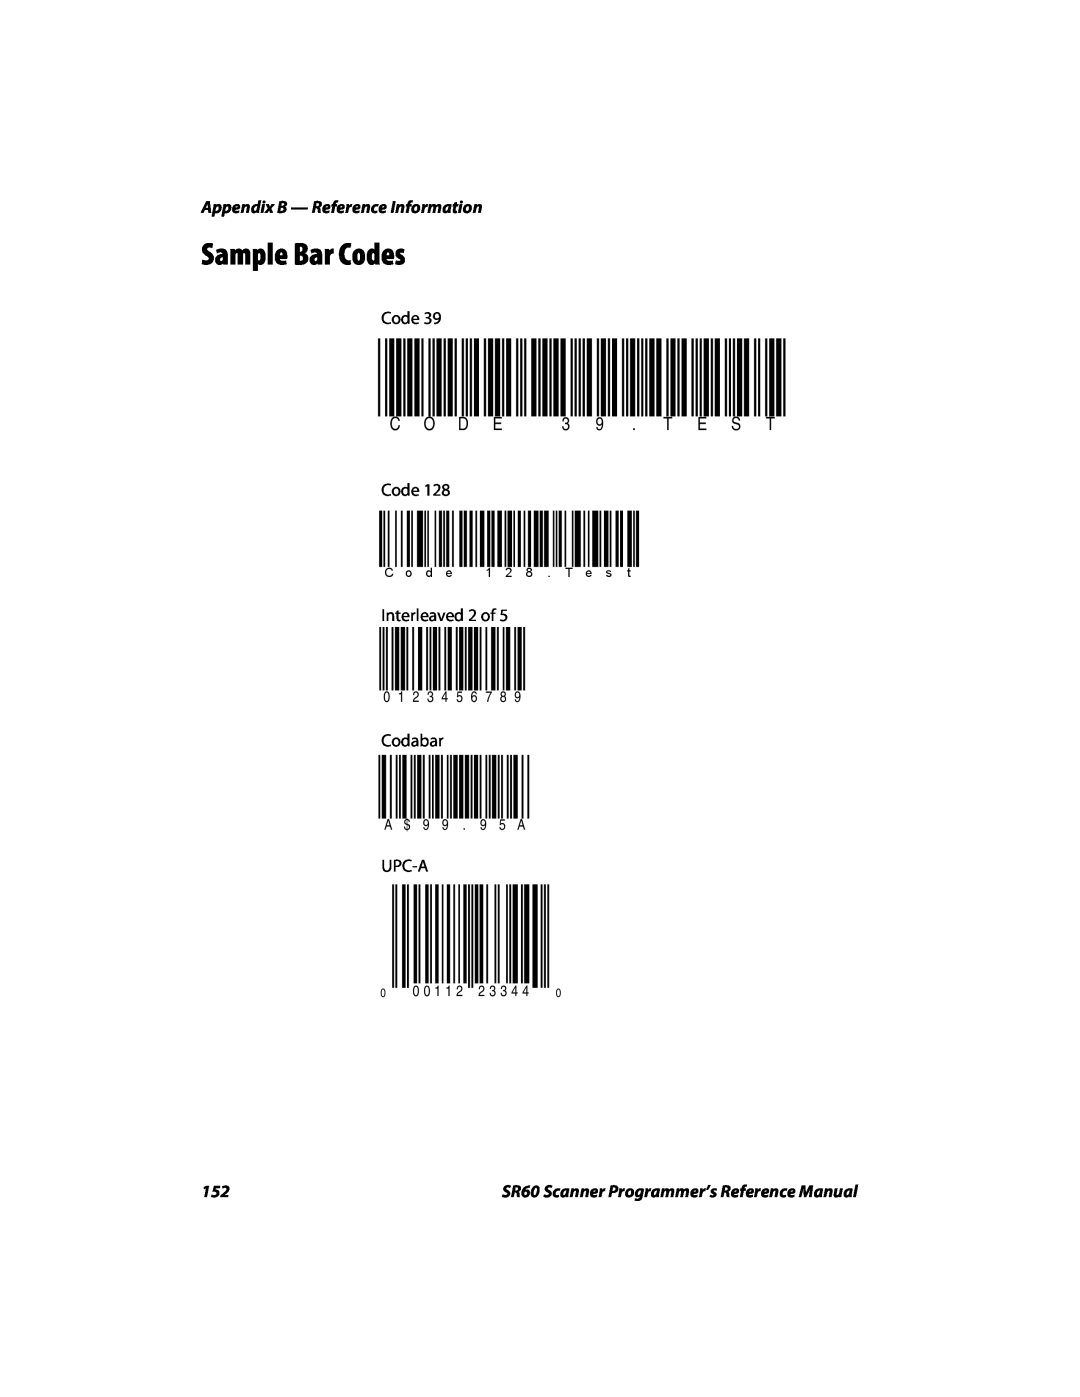 Intermec SR60 manual Sample Bar Codes, C O D E 3 9 . T E S T, Appendix B - Reference Information, Interleaved 2 of, Codabar 